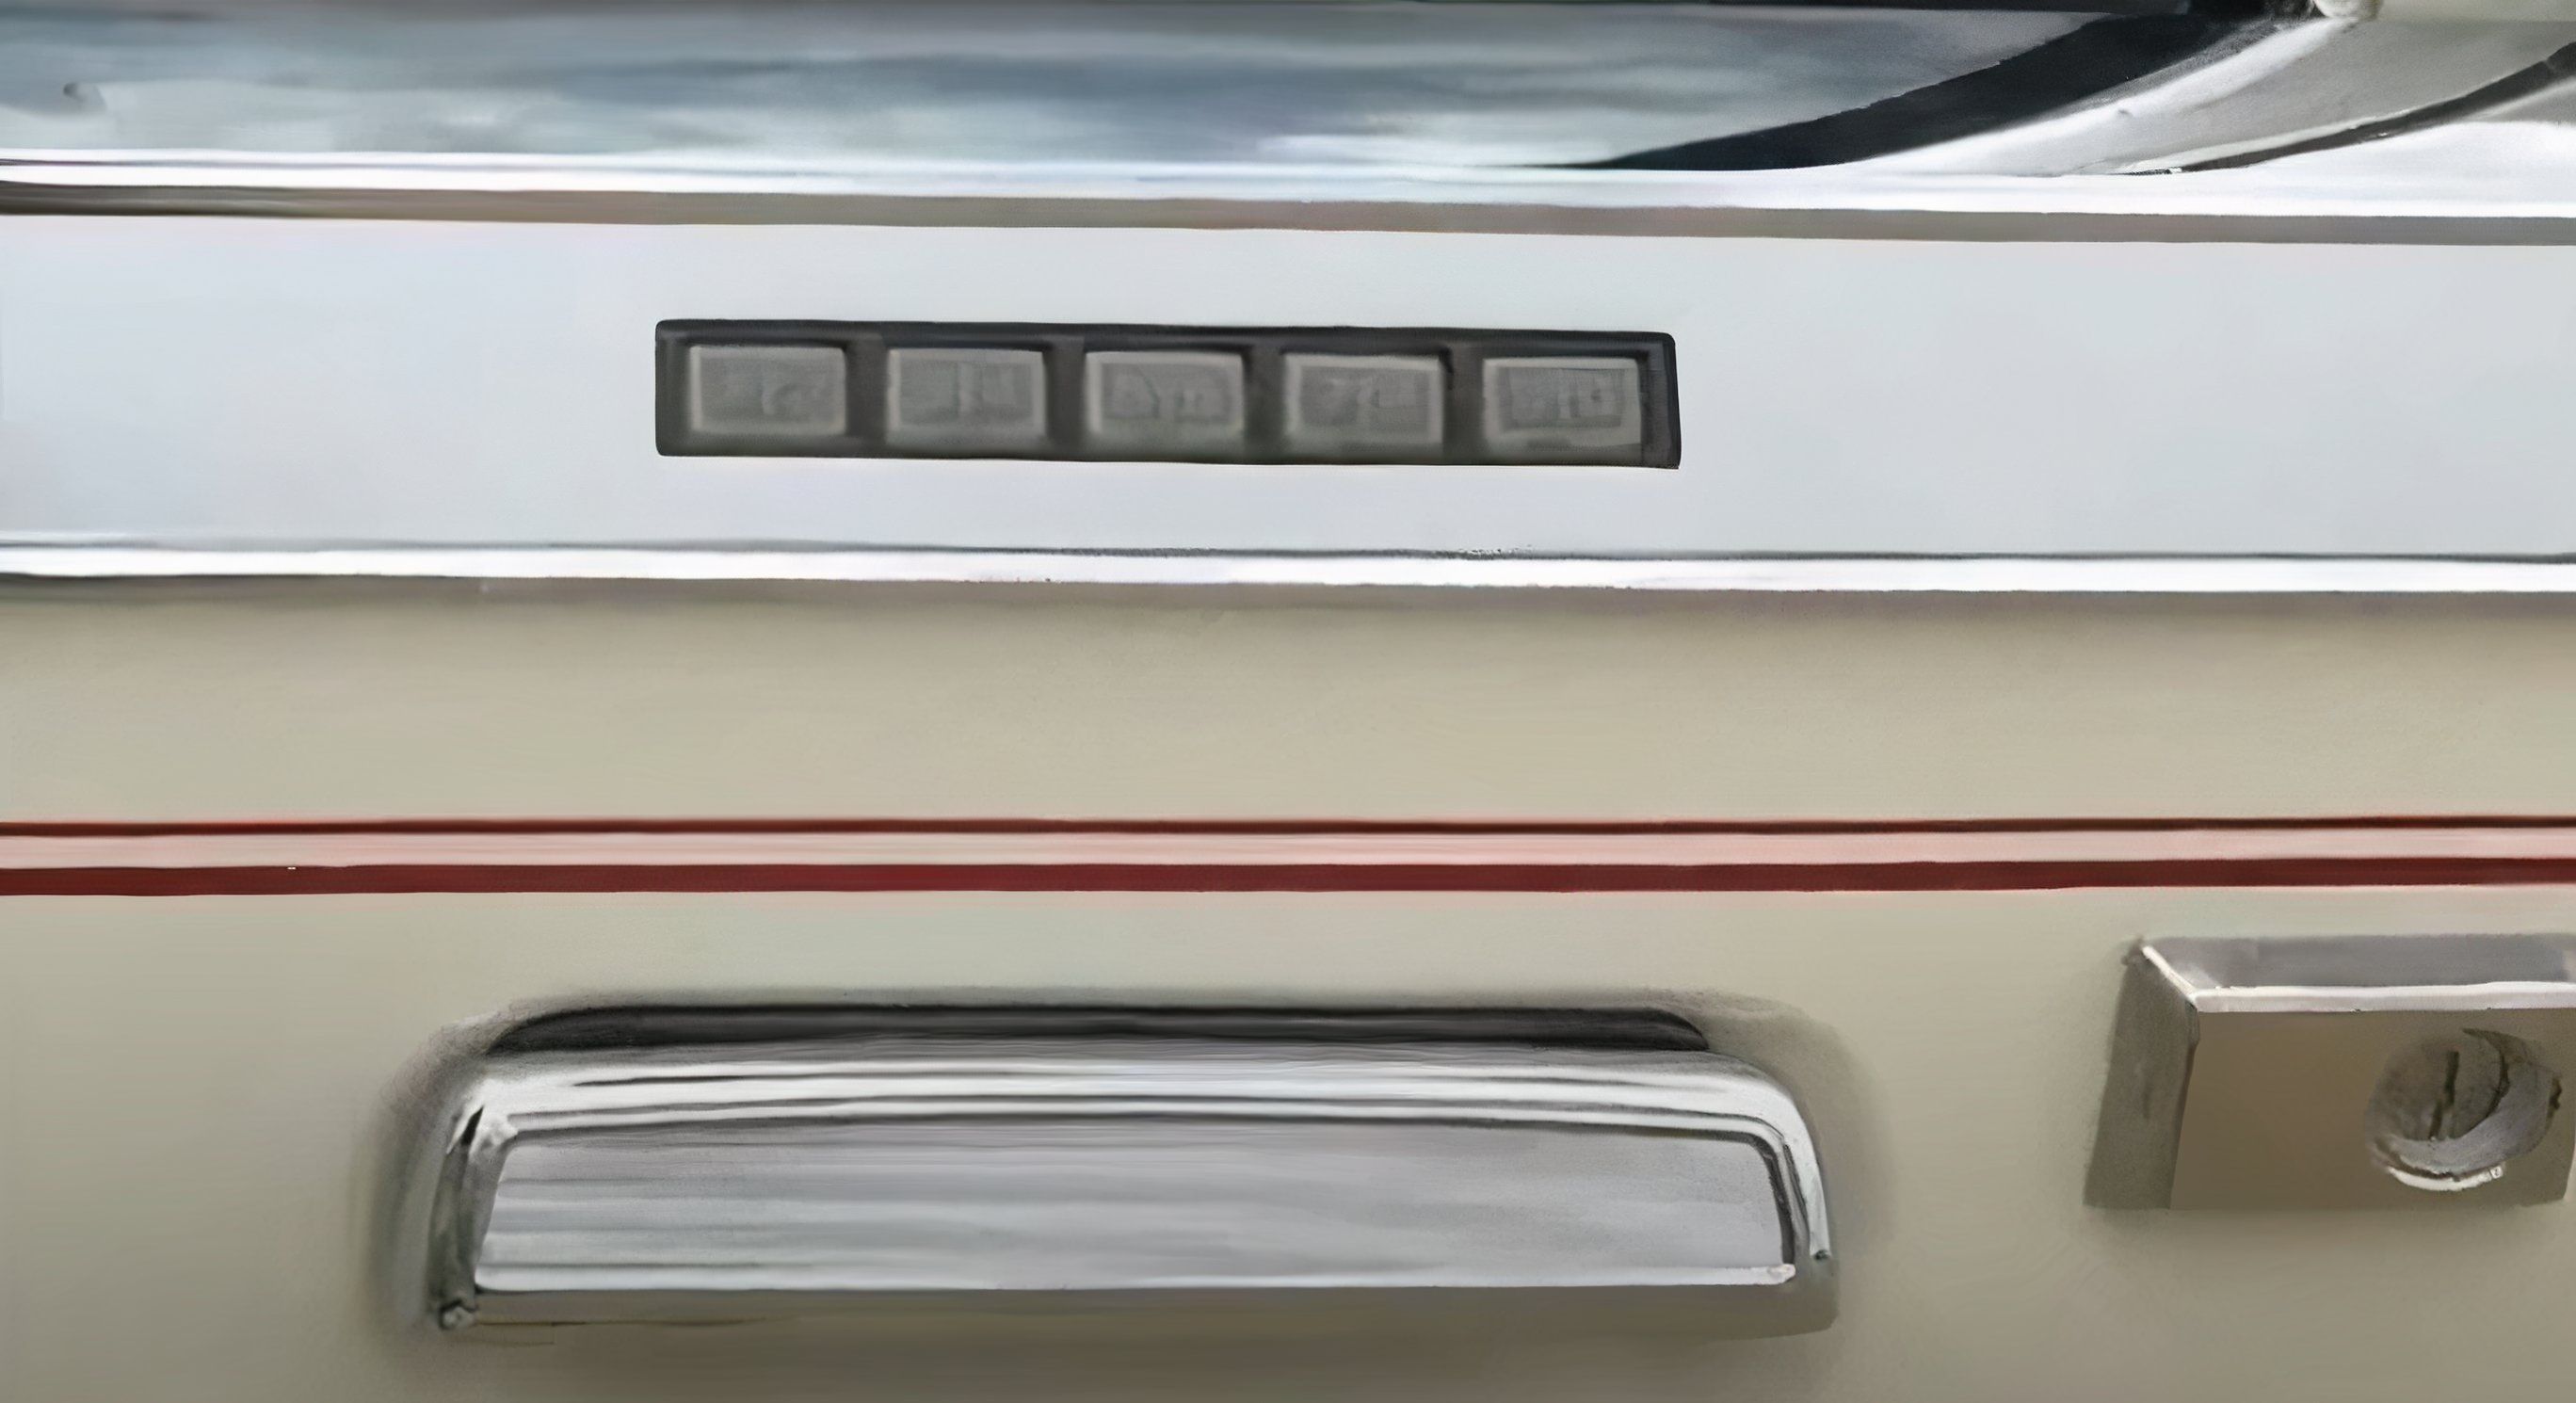 1980 Thunderbird keypad